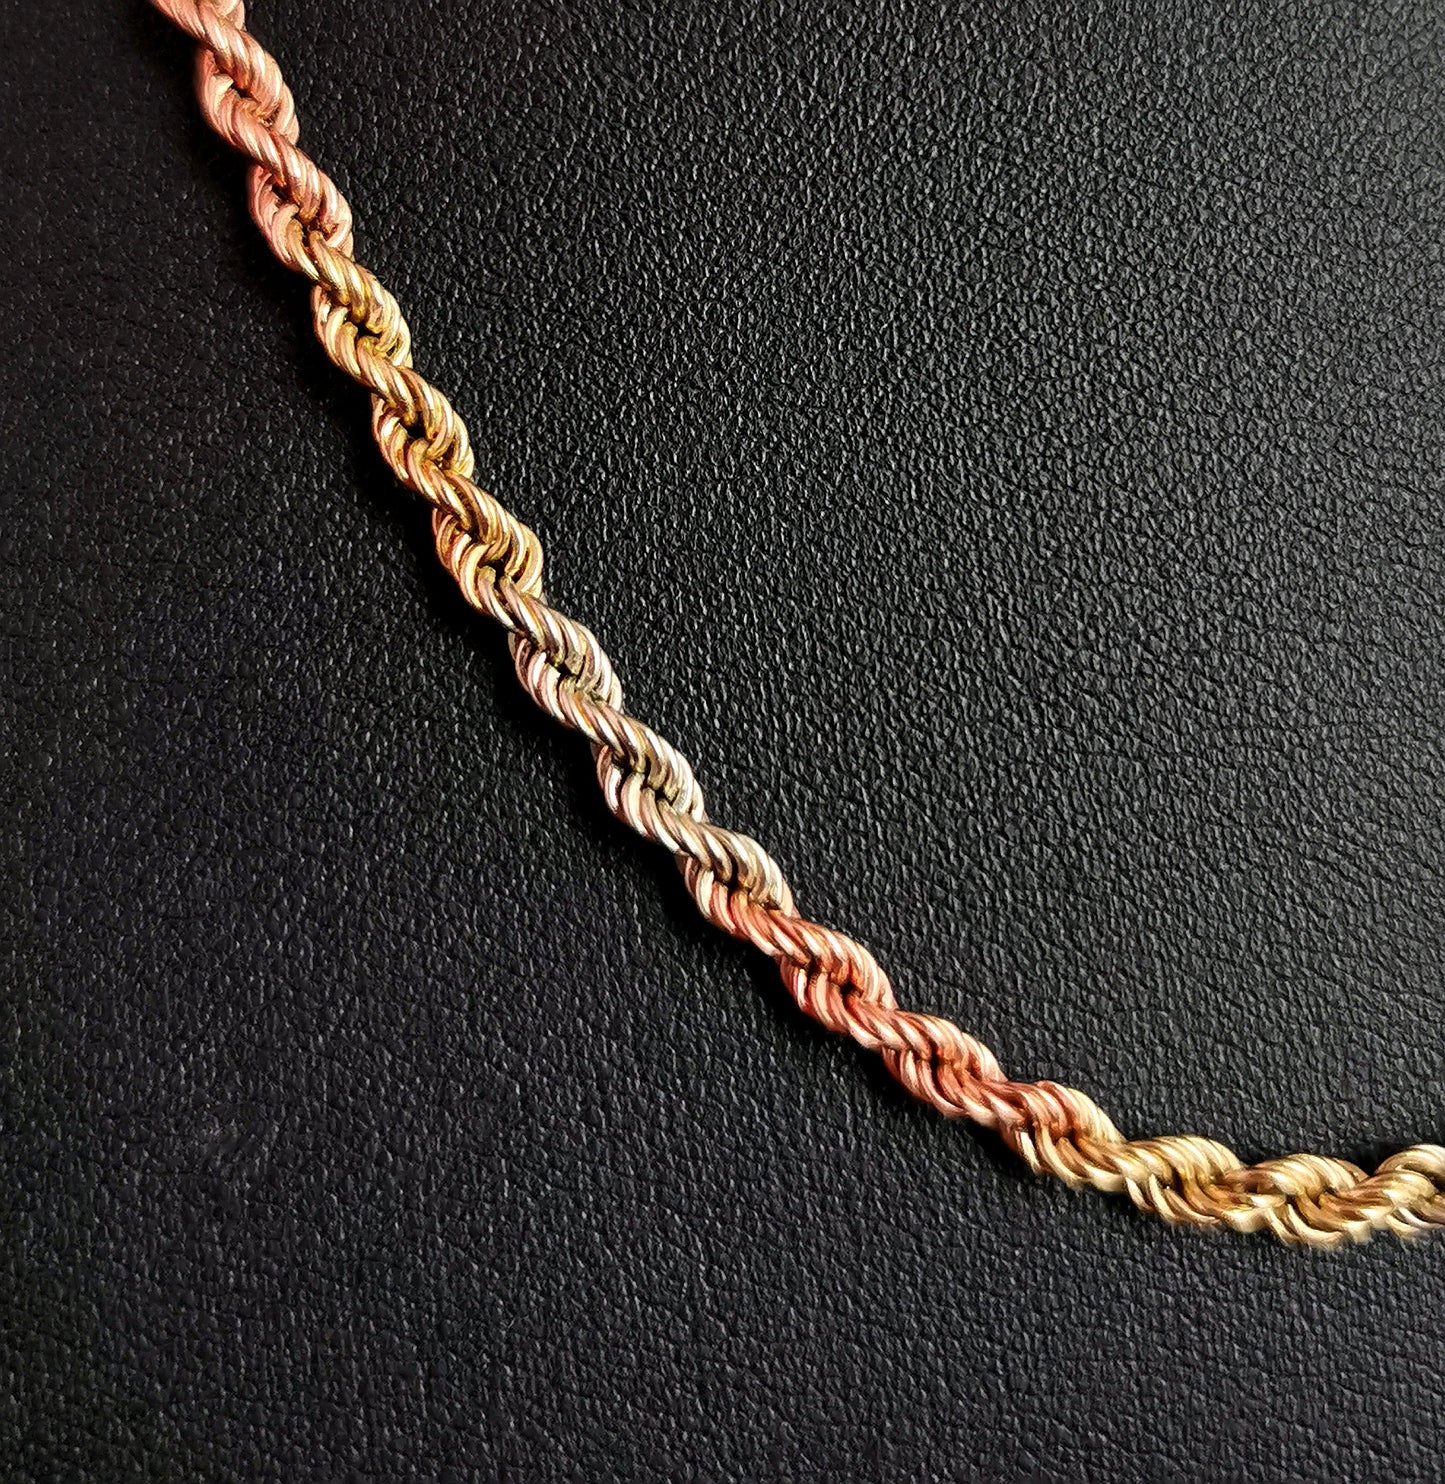 Vintage 9ct tri colour gold Rope Chain necklace